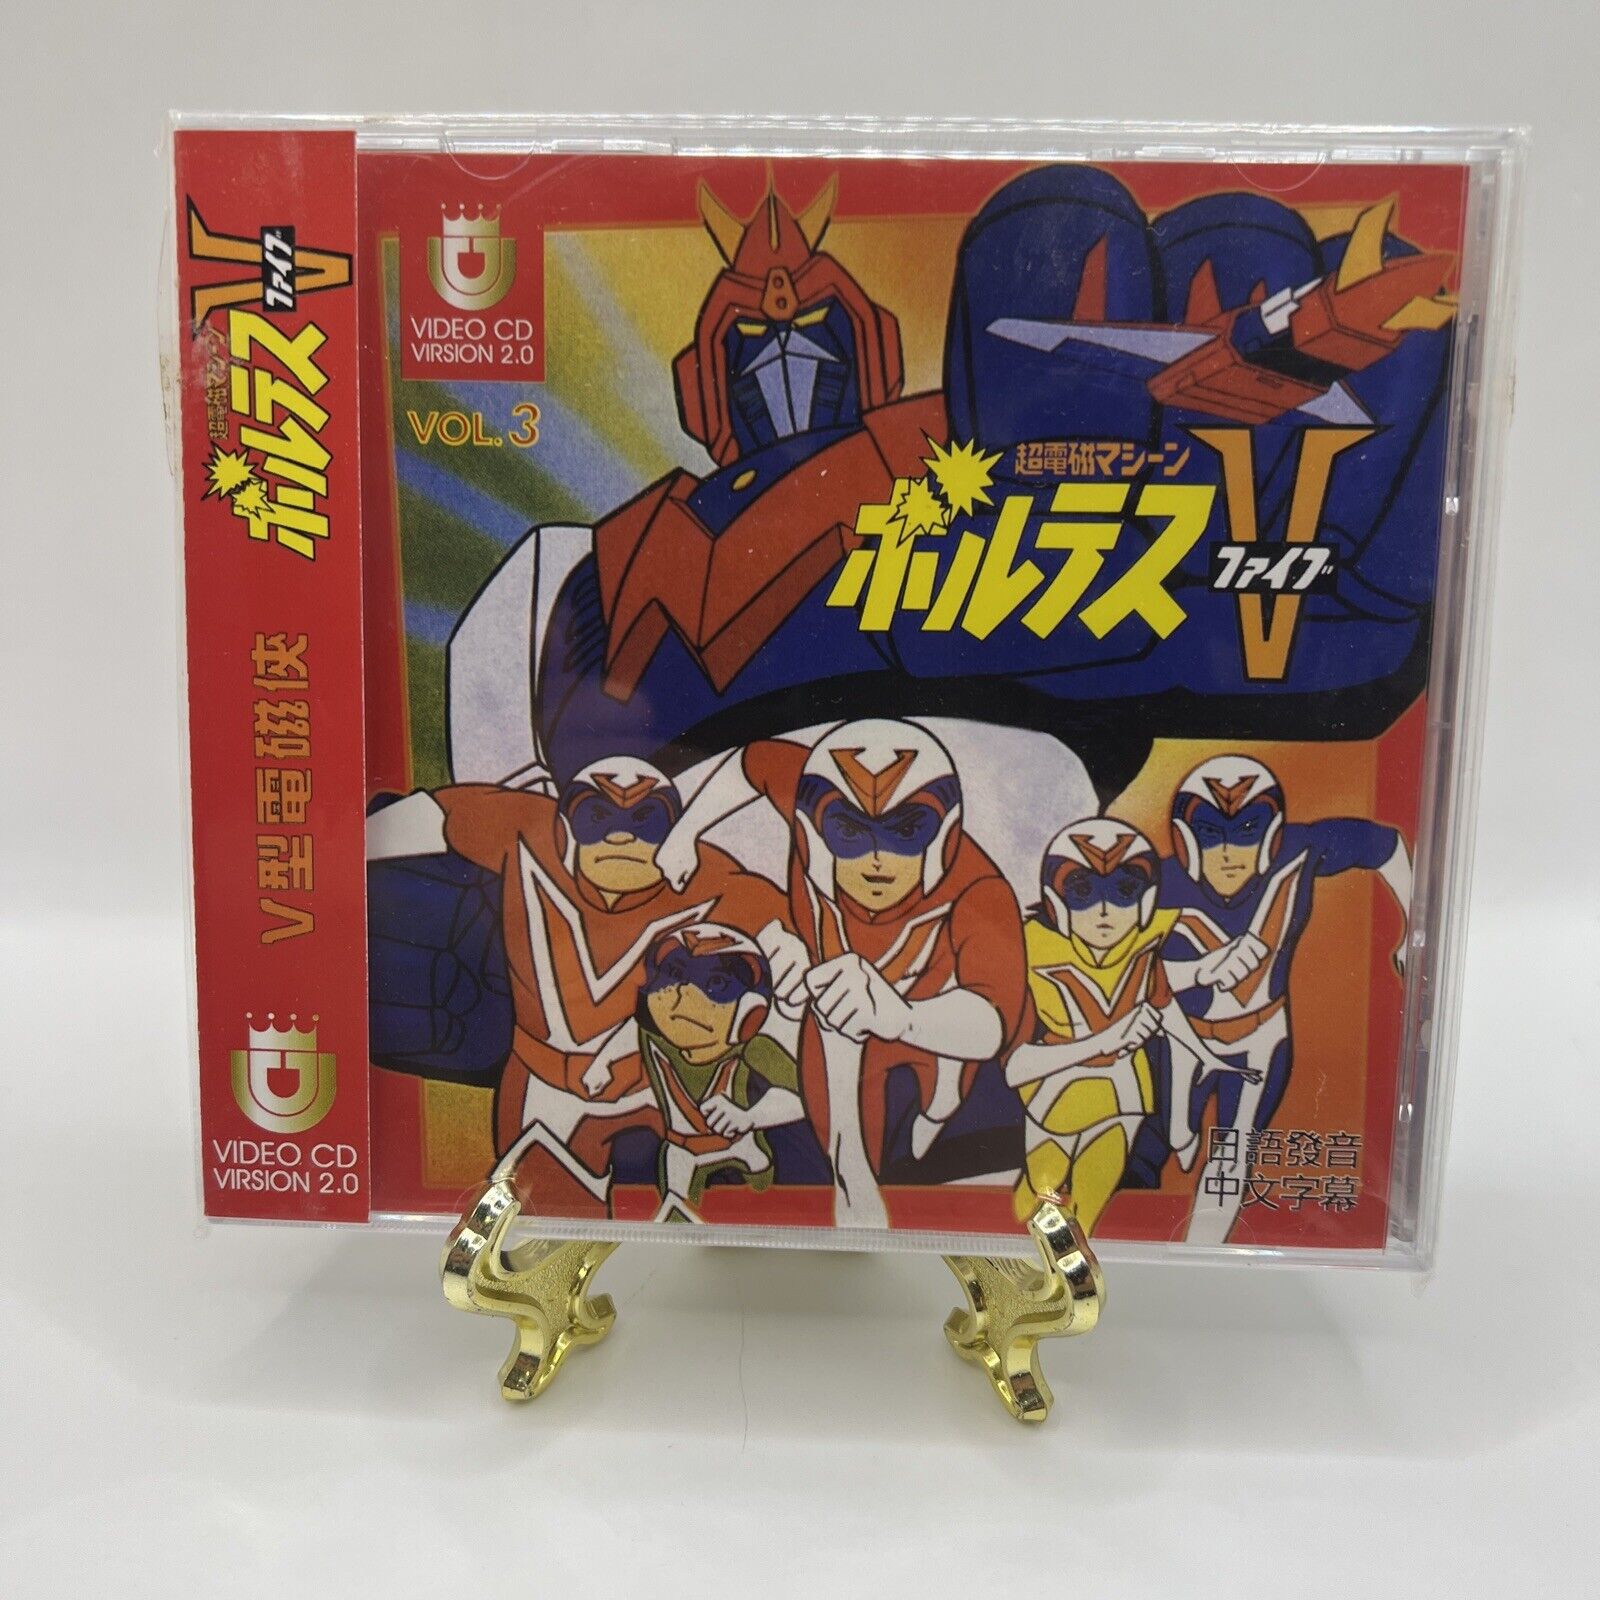 Super Rare 1997 Japanese Volume 3 Voltes Five Anime Drama JAPAN ANIME Video CD